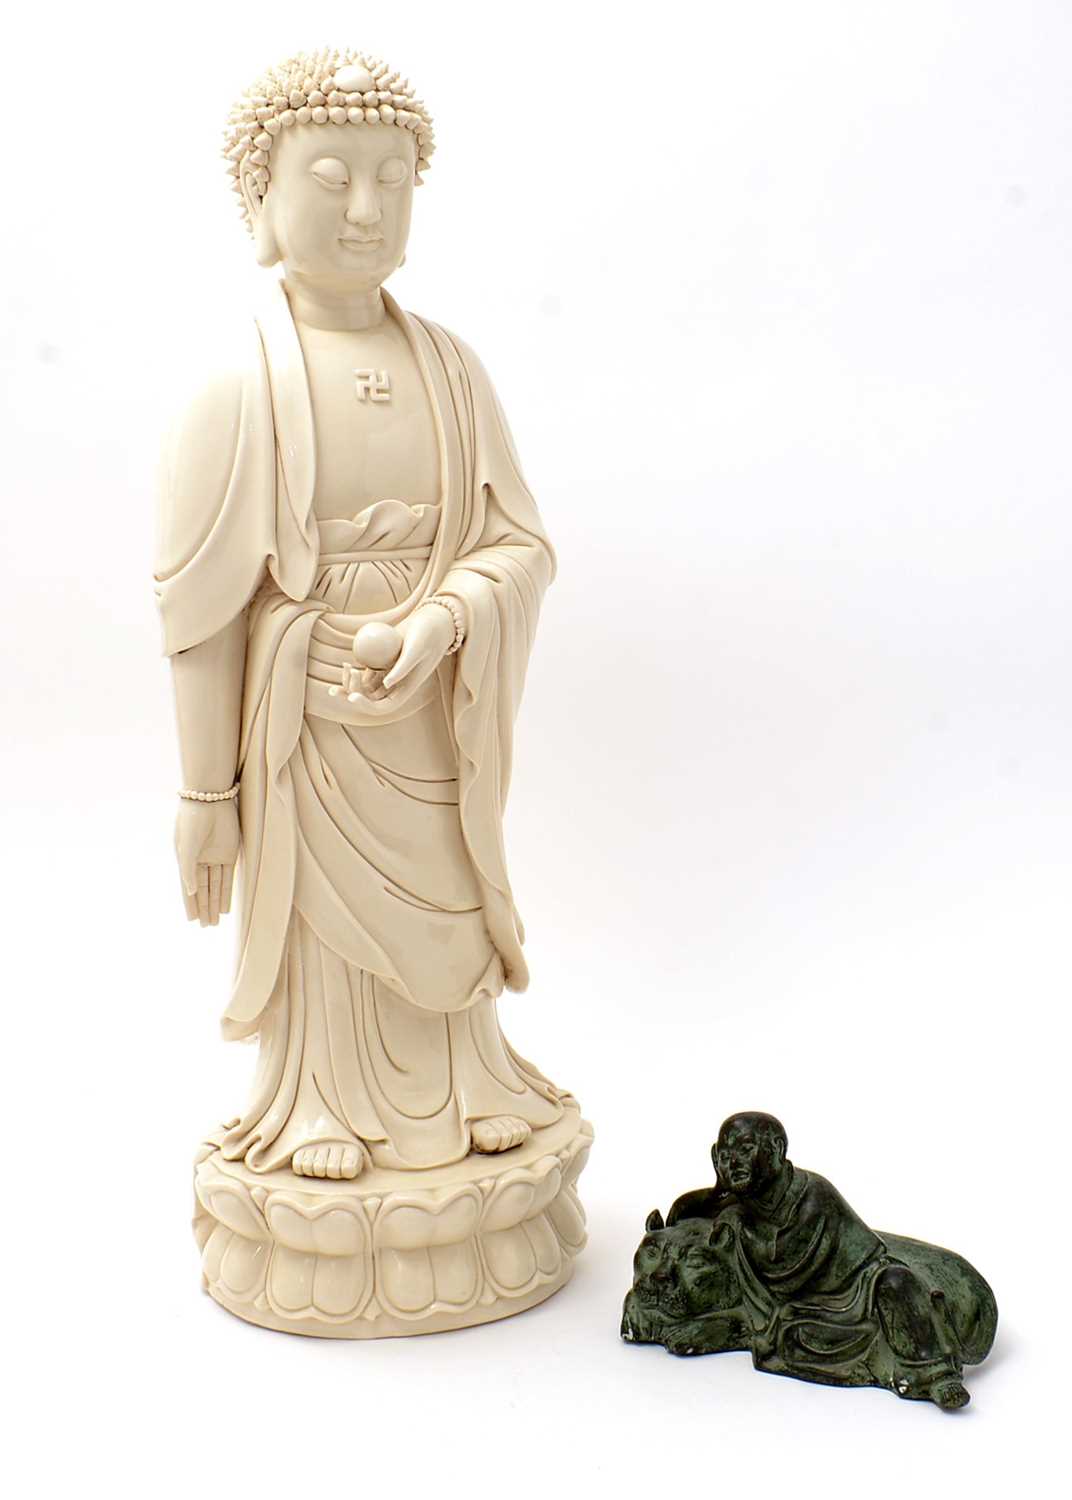 Large blanc de chine style figure Buddha, Bronzed figure and tiger - Image 23 of 23